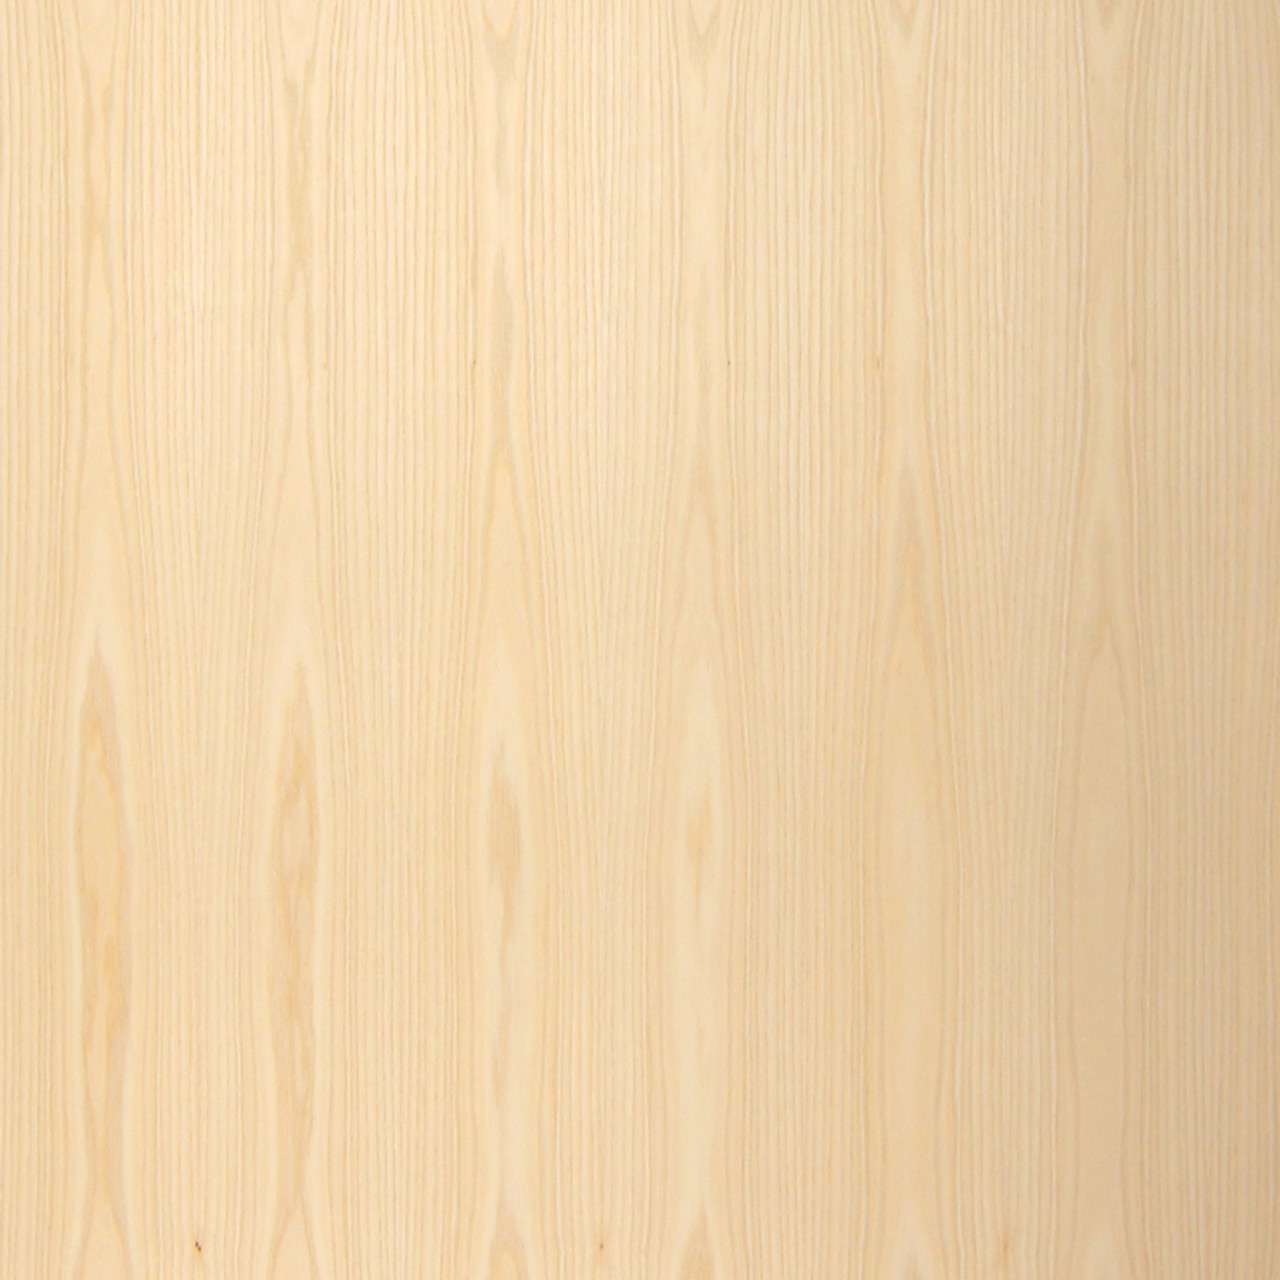 Ash Edge Banding - High Quality Real Wood Veneer Edge Banding